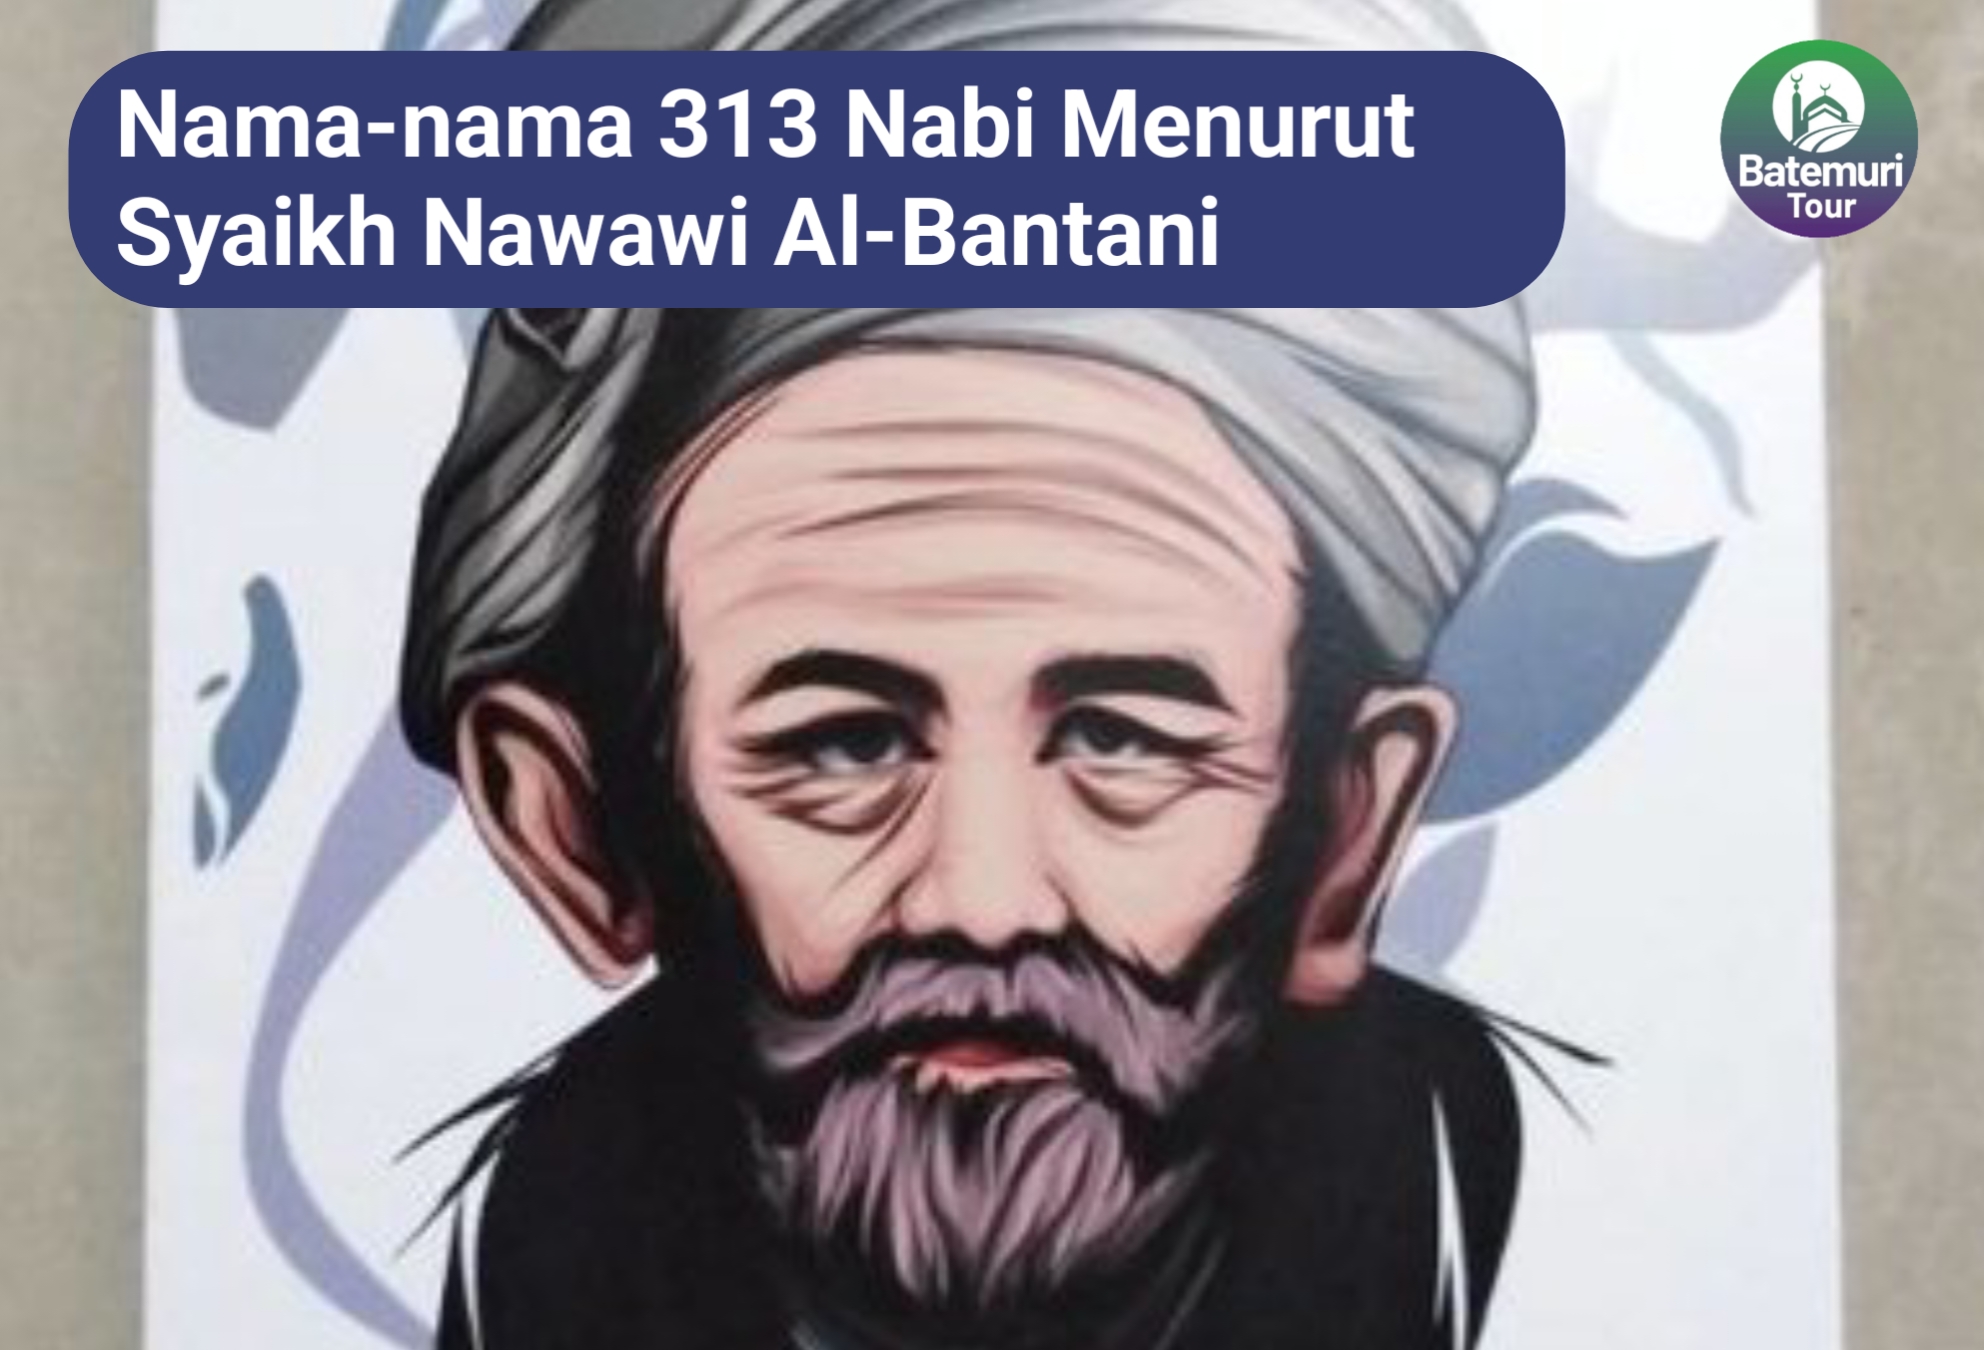 Nama-nama 313 Nabi Menurut Syaikh Nawawi Al-Bantani